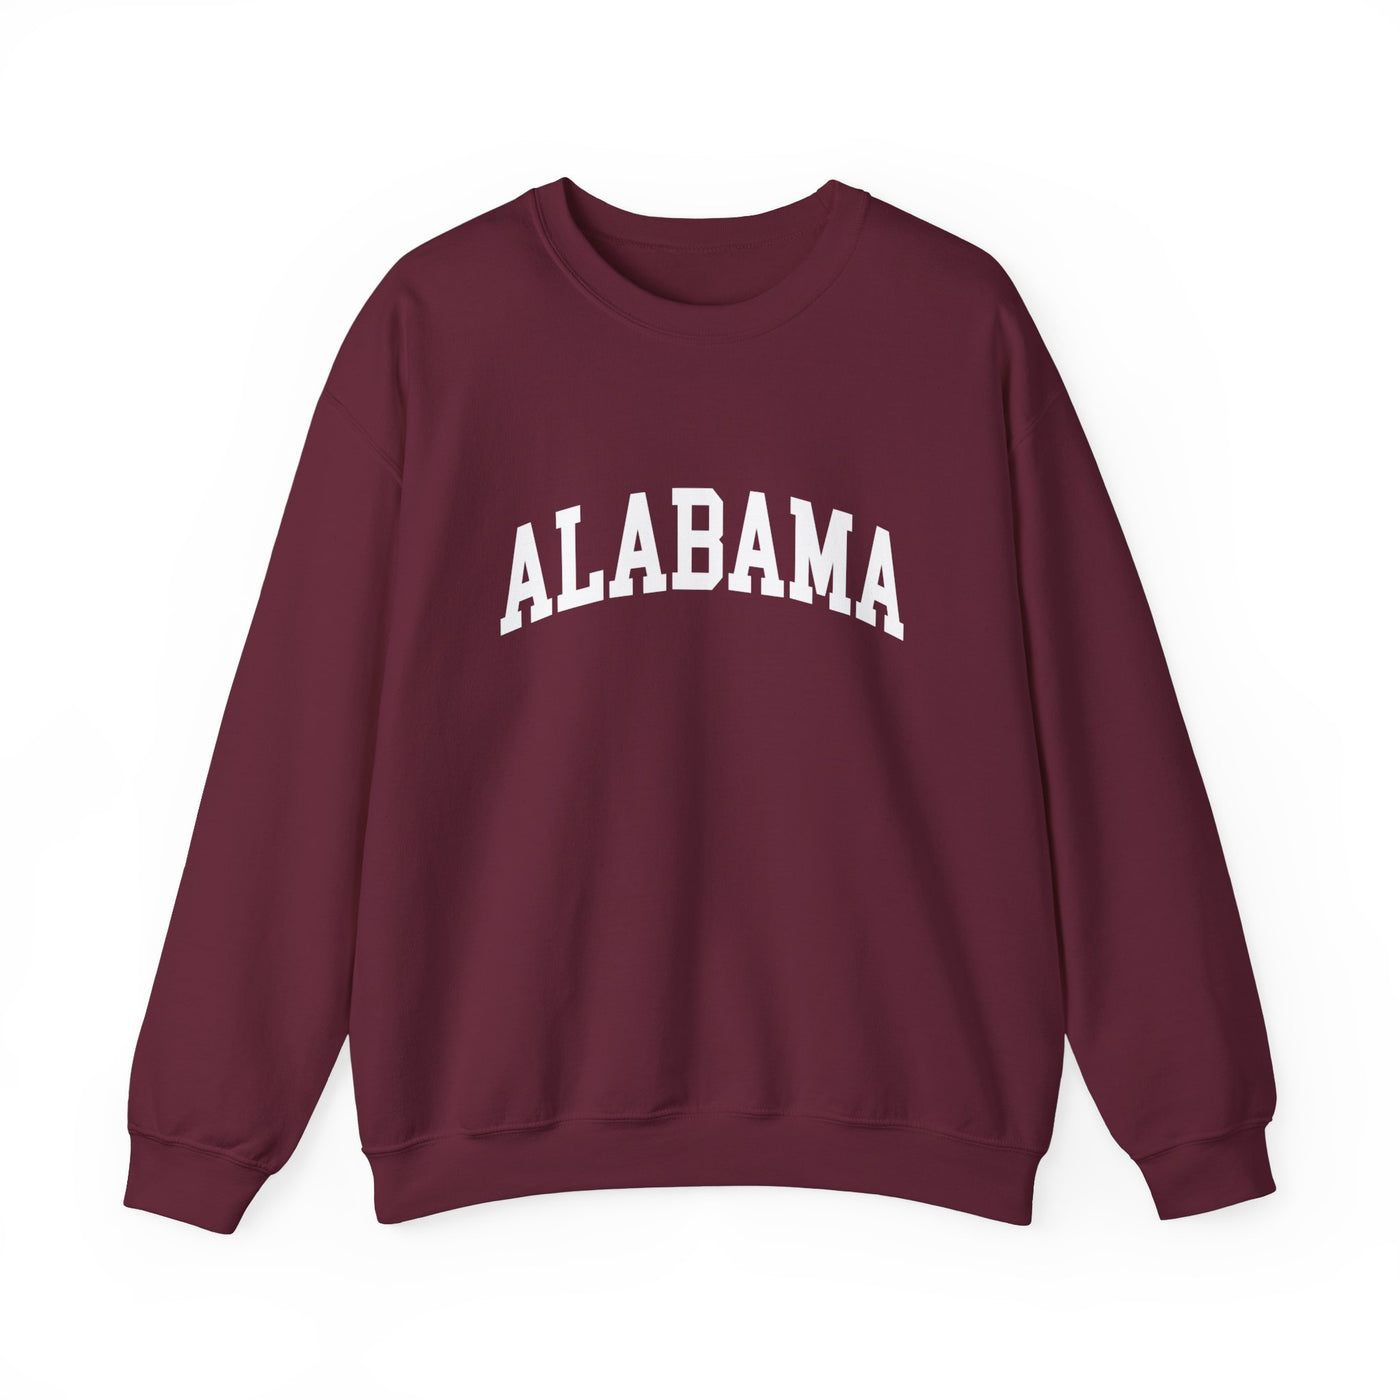 Alabama Collegiate Crewneck Sweatshirt